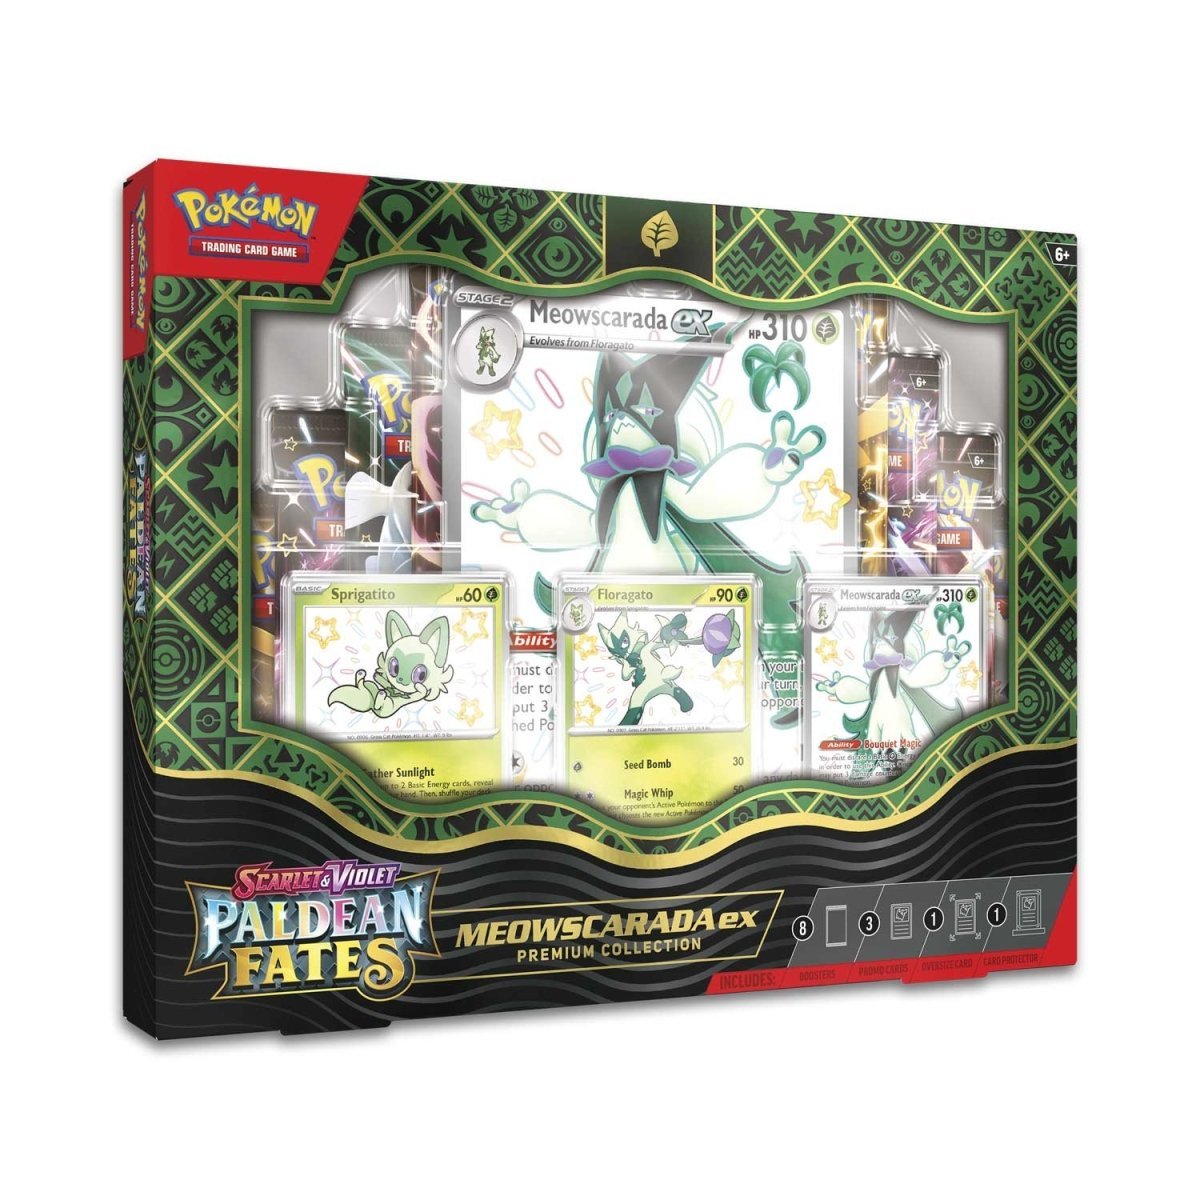 Pokémon TCG: SV - Paldean Fates Meowscarada ex Premium Collection - PokeRvm